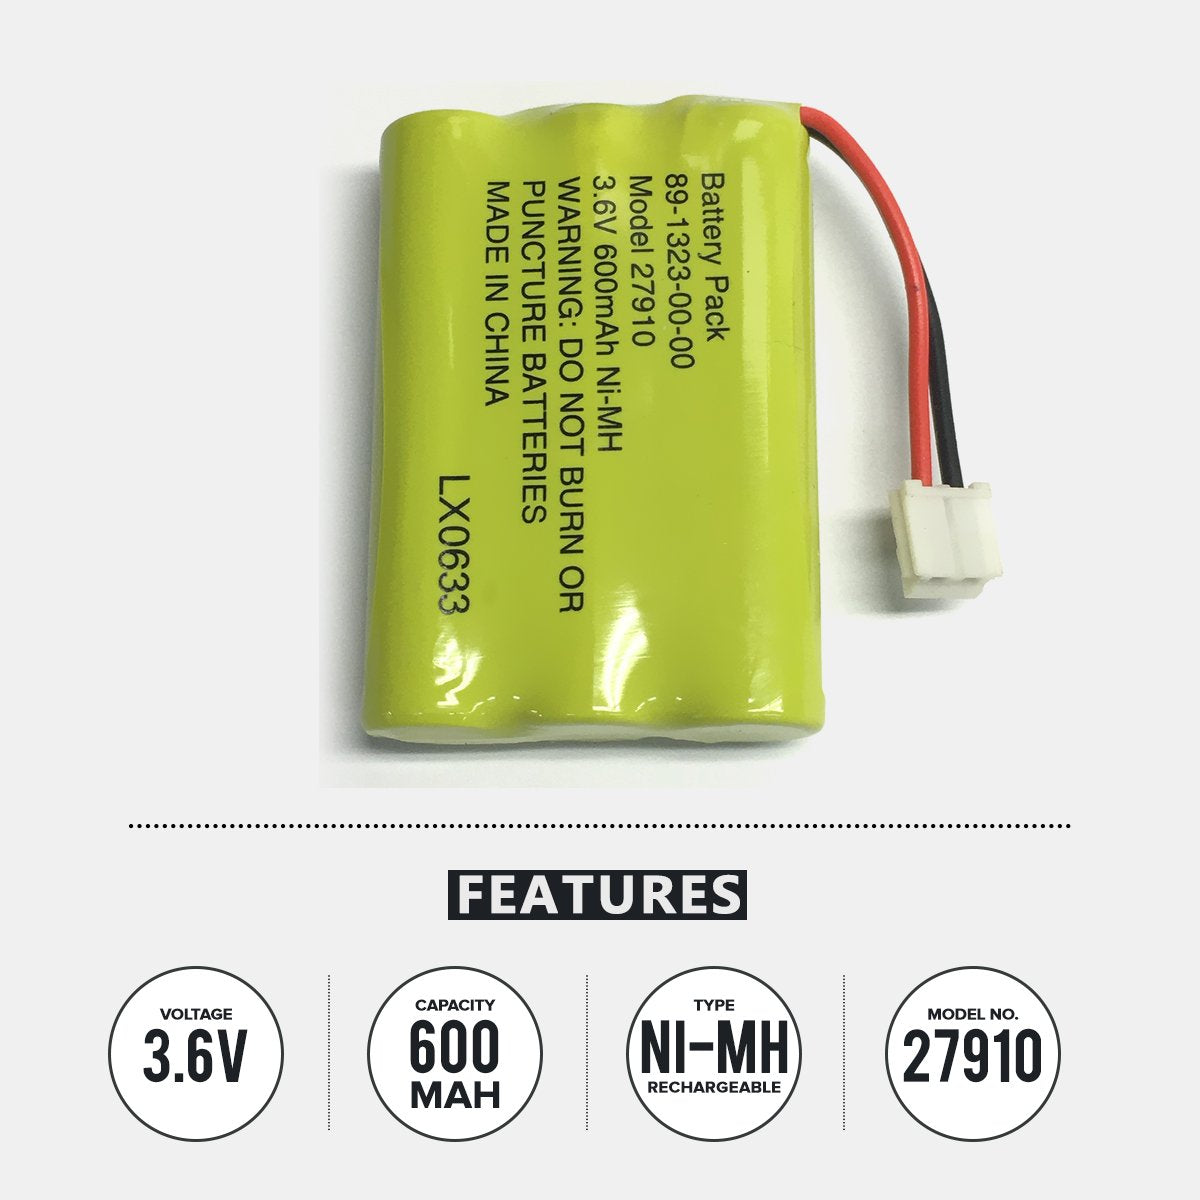 GE 2-7920 Cordless Phone Battery